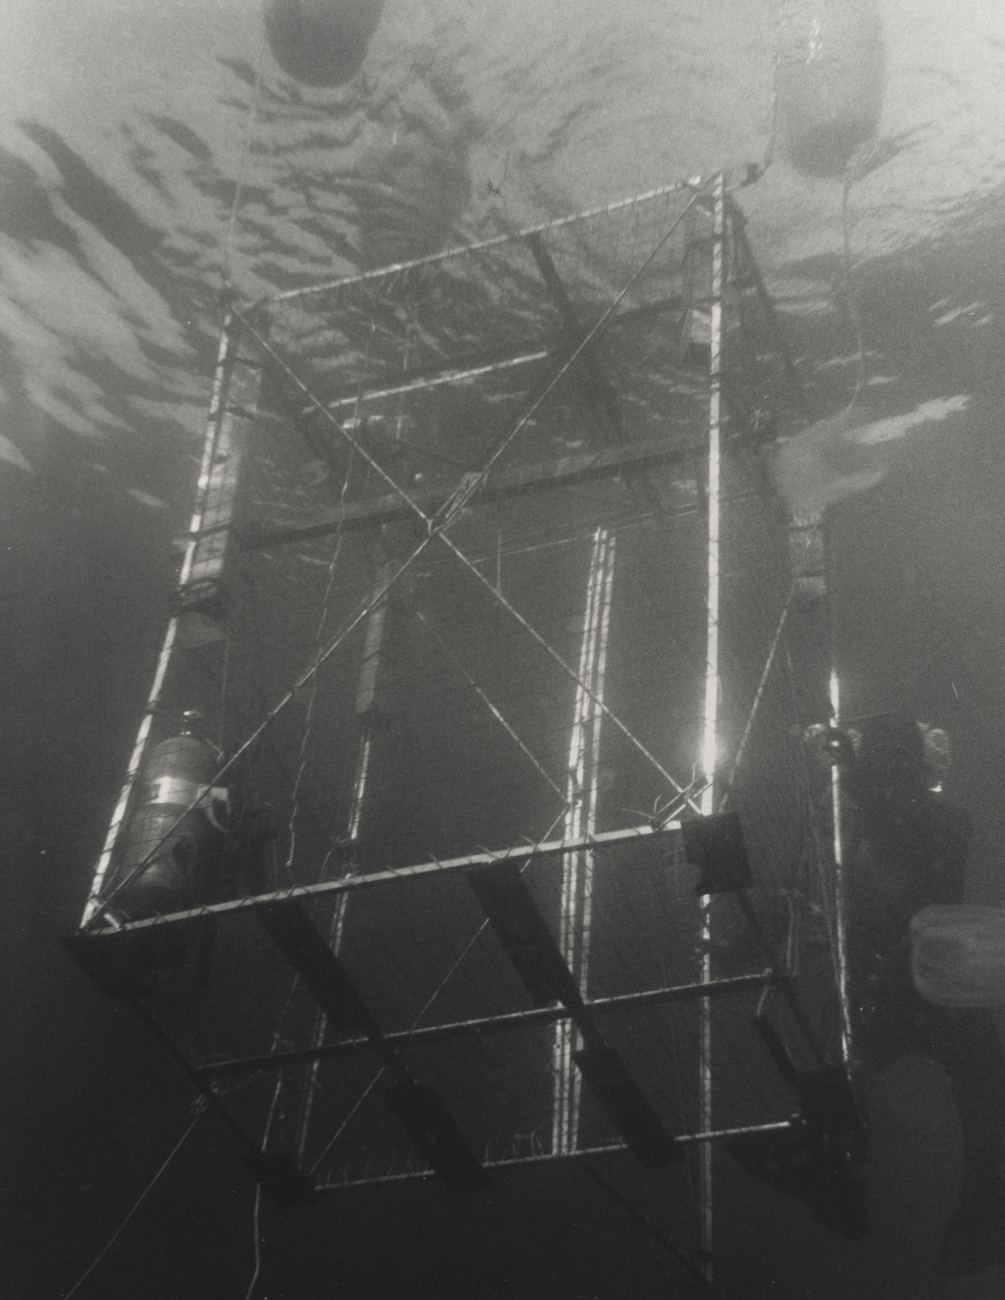 Diver biologist entering shark cage from sport fishing boat